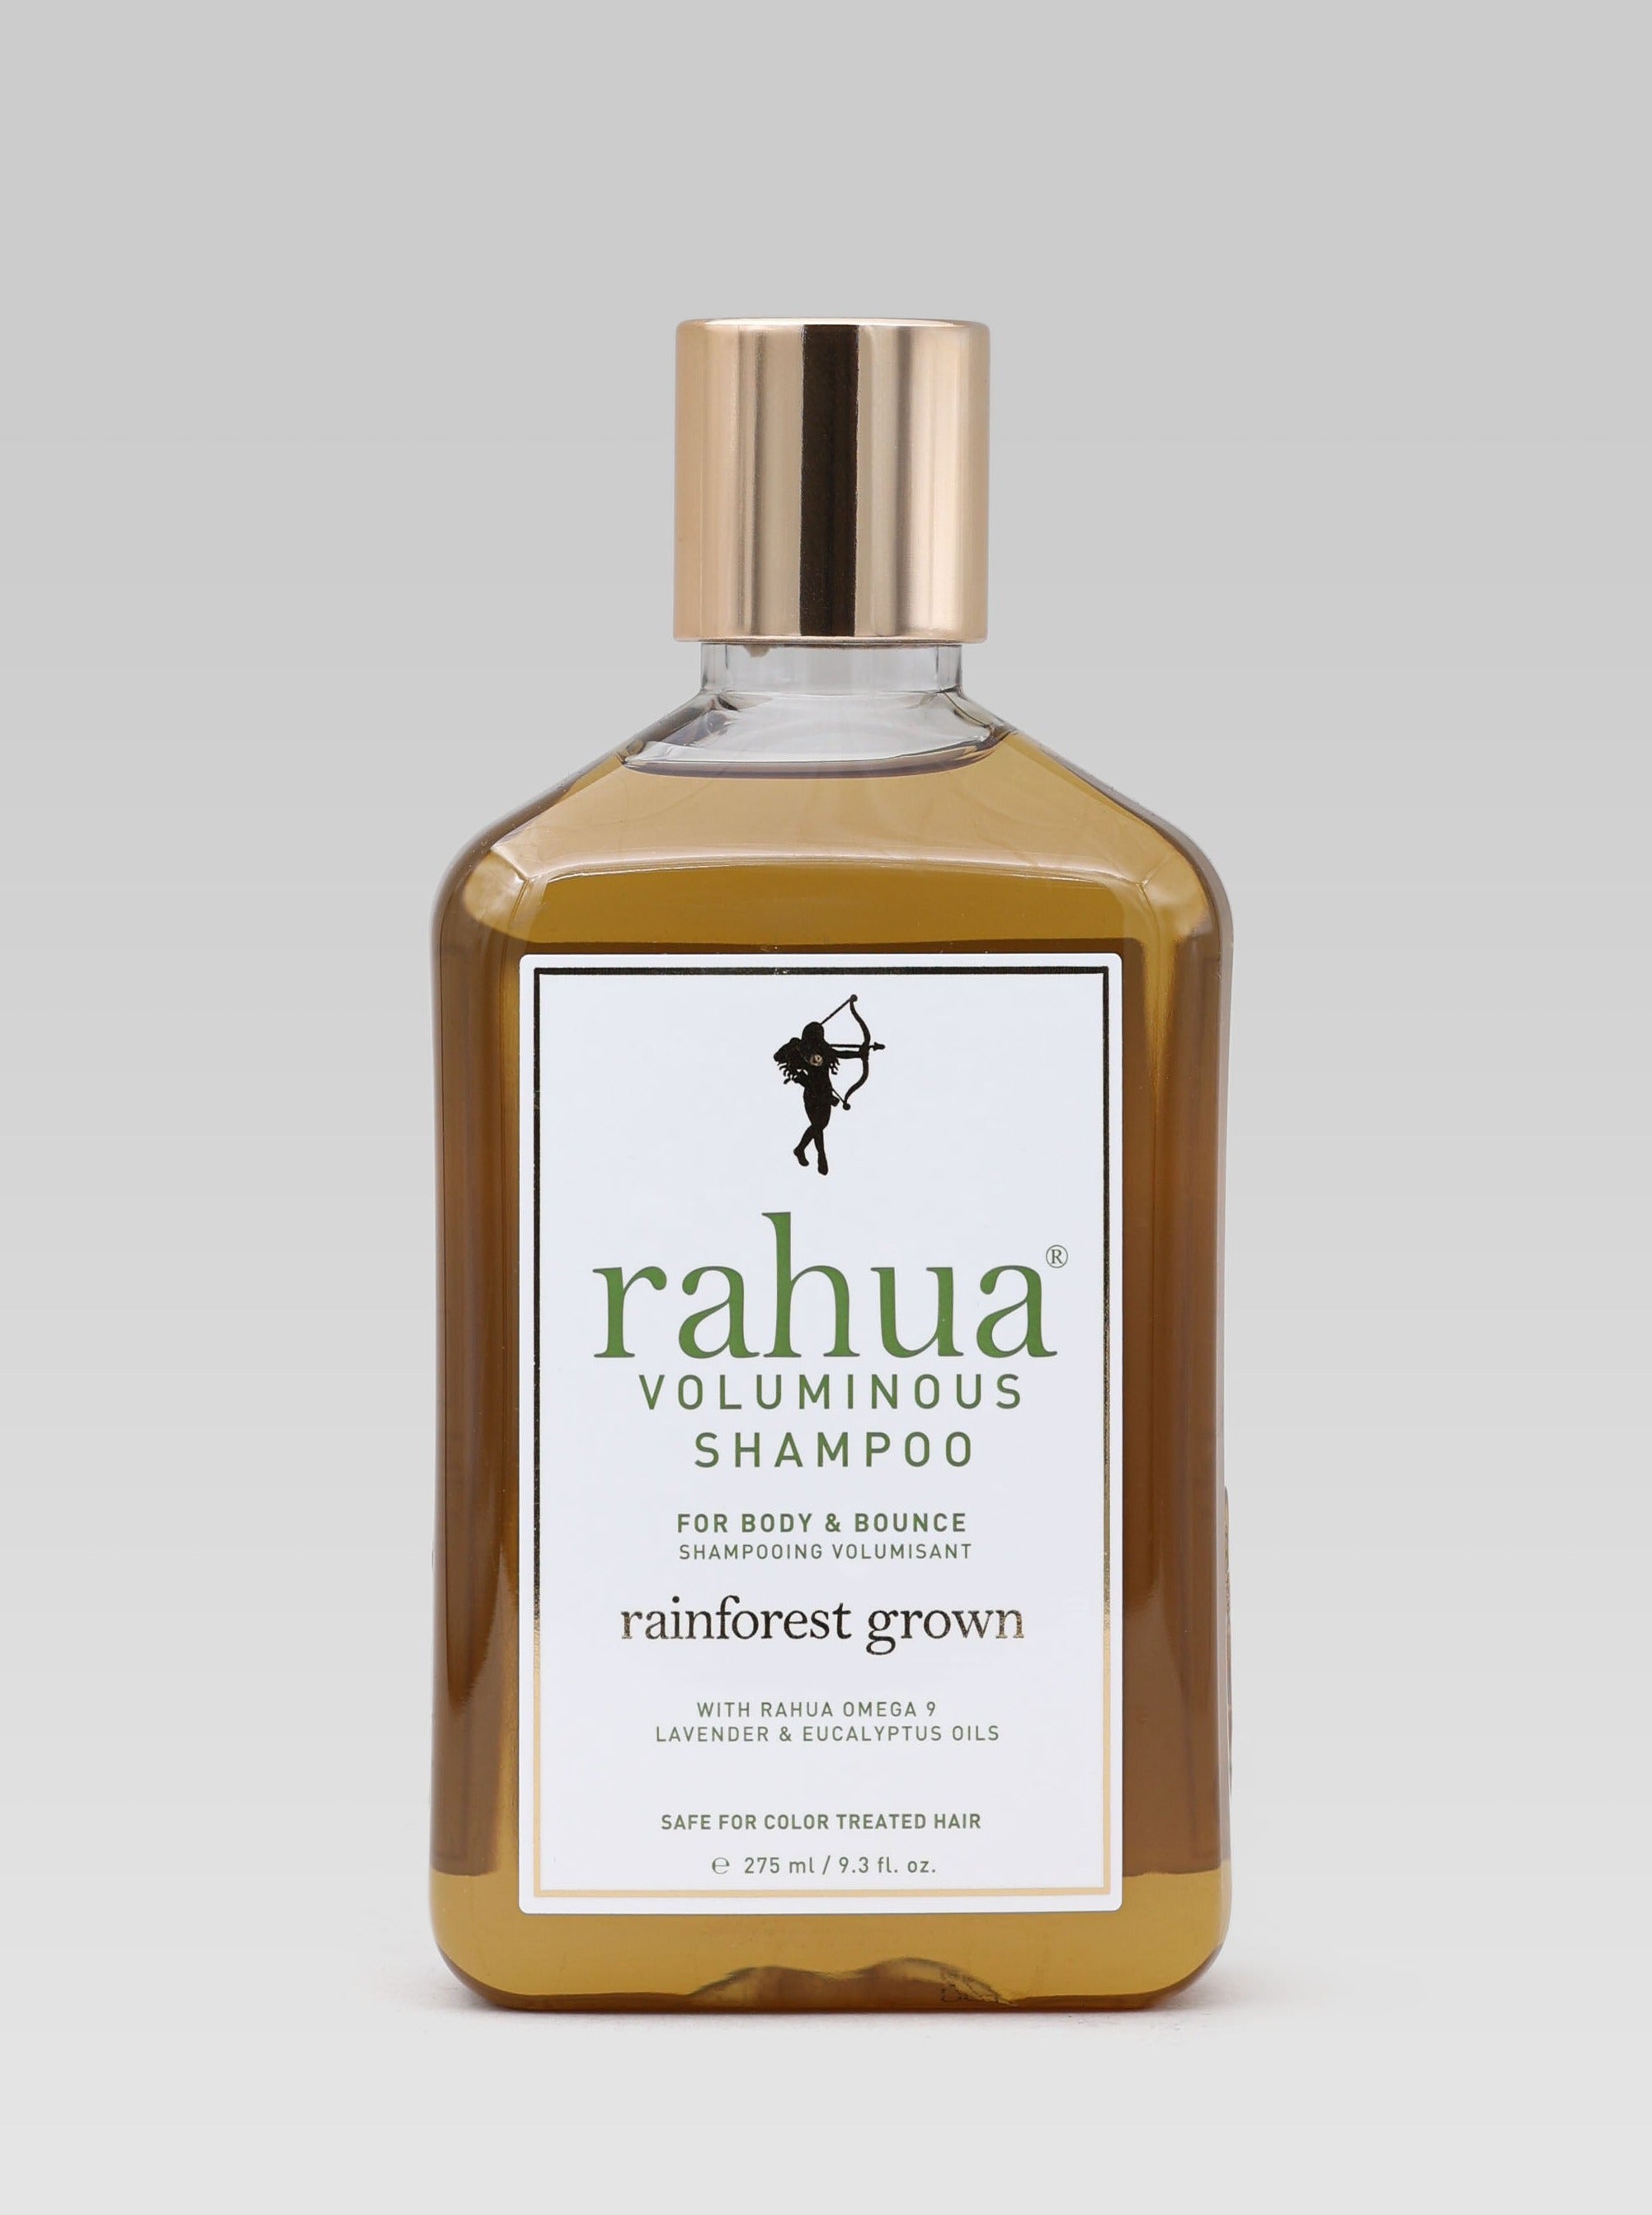 RAHUA Voluminous Shampoo product shot